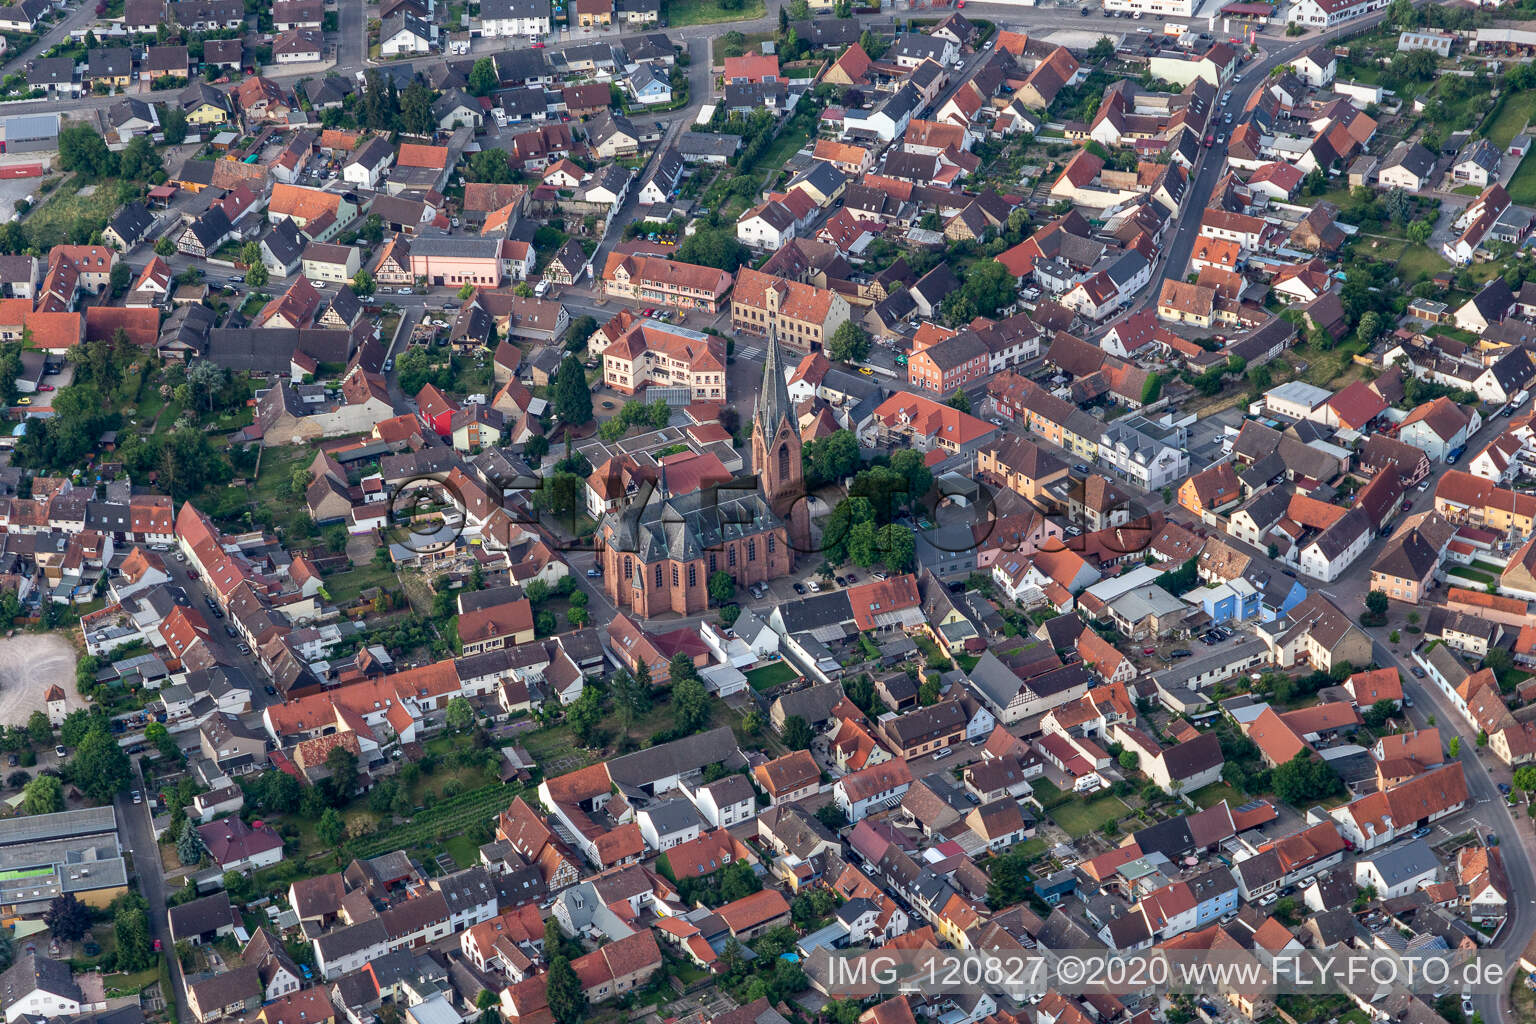 Drone image of District Rheinsheim in Philippsburg in the state Baden-Wuerttemberg, Germany